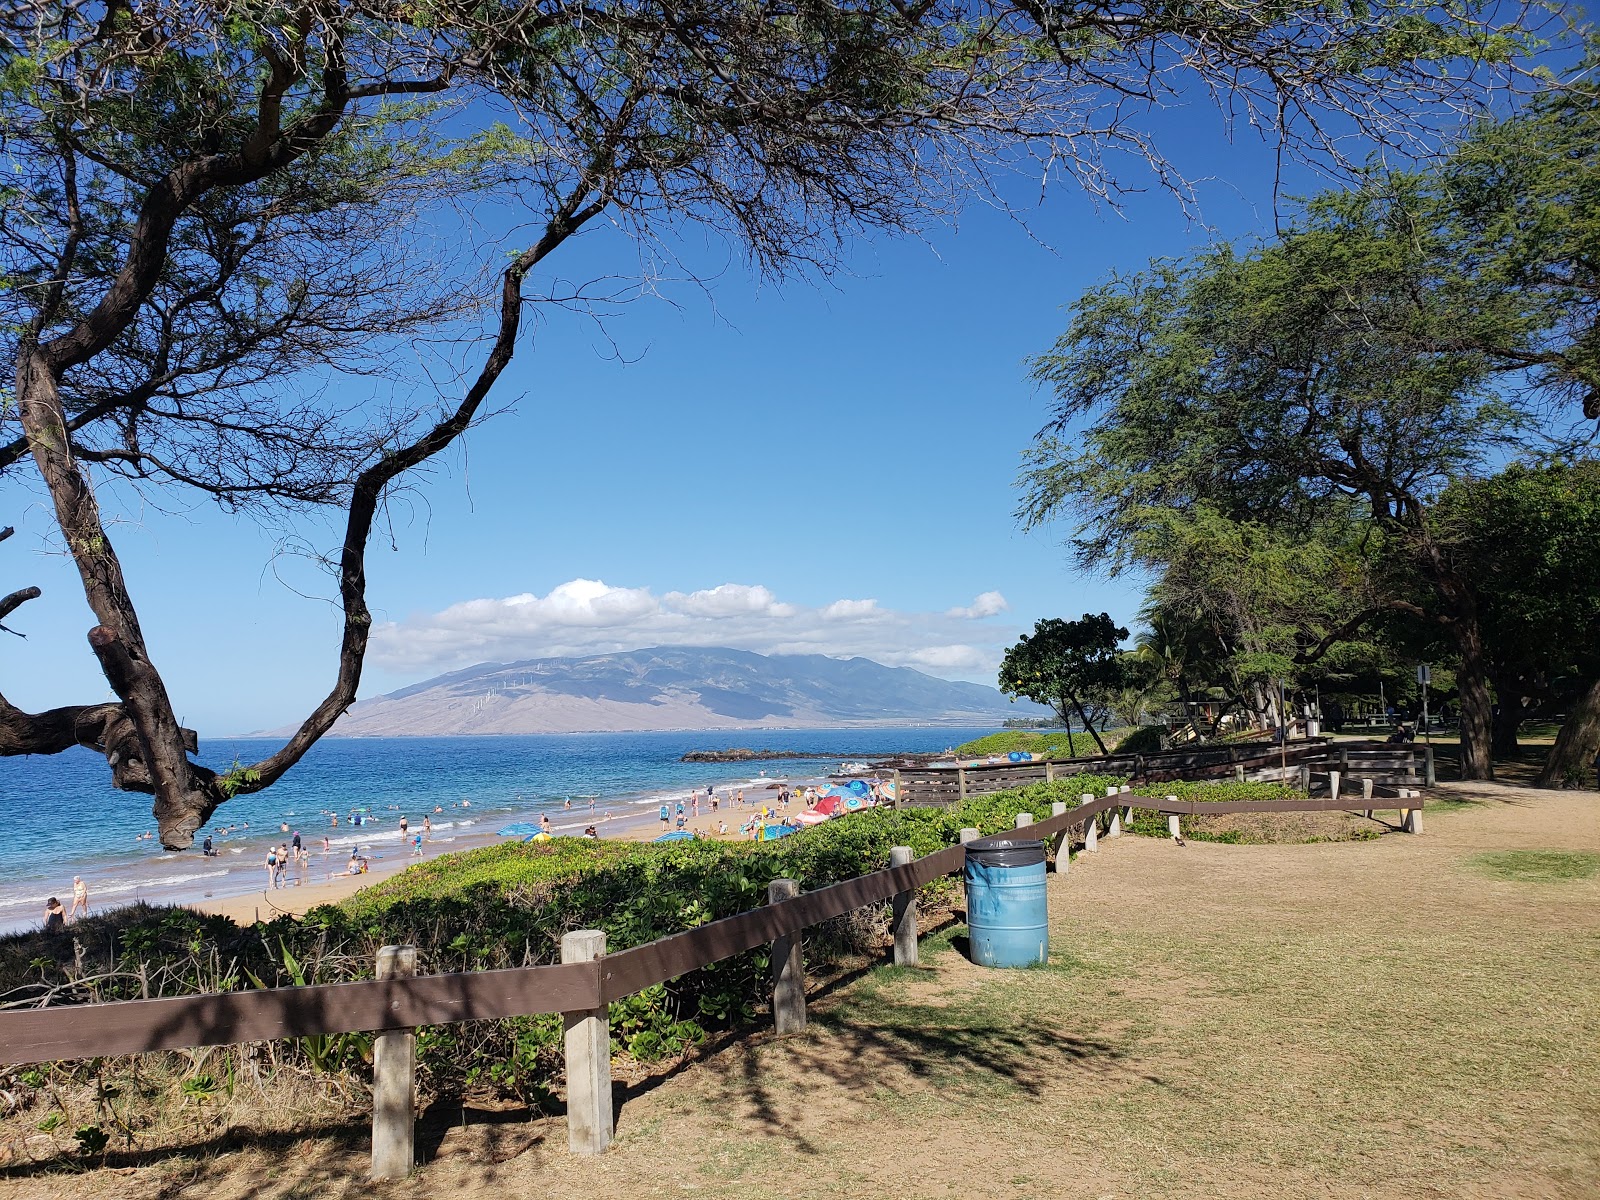 Photo of Ulua Beach - popular place among relax connoisseurs